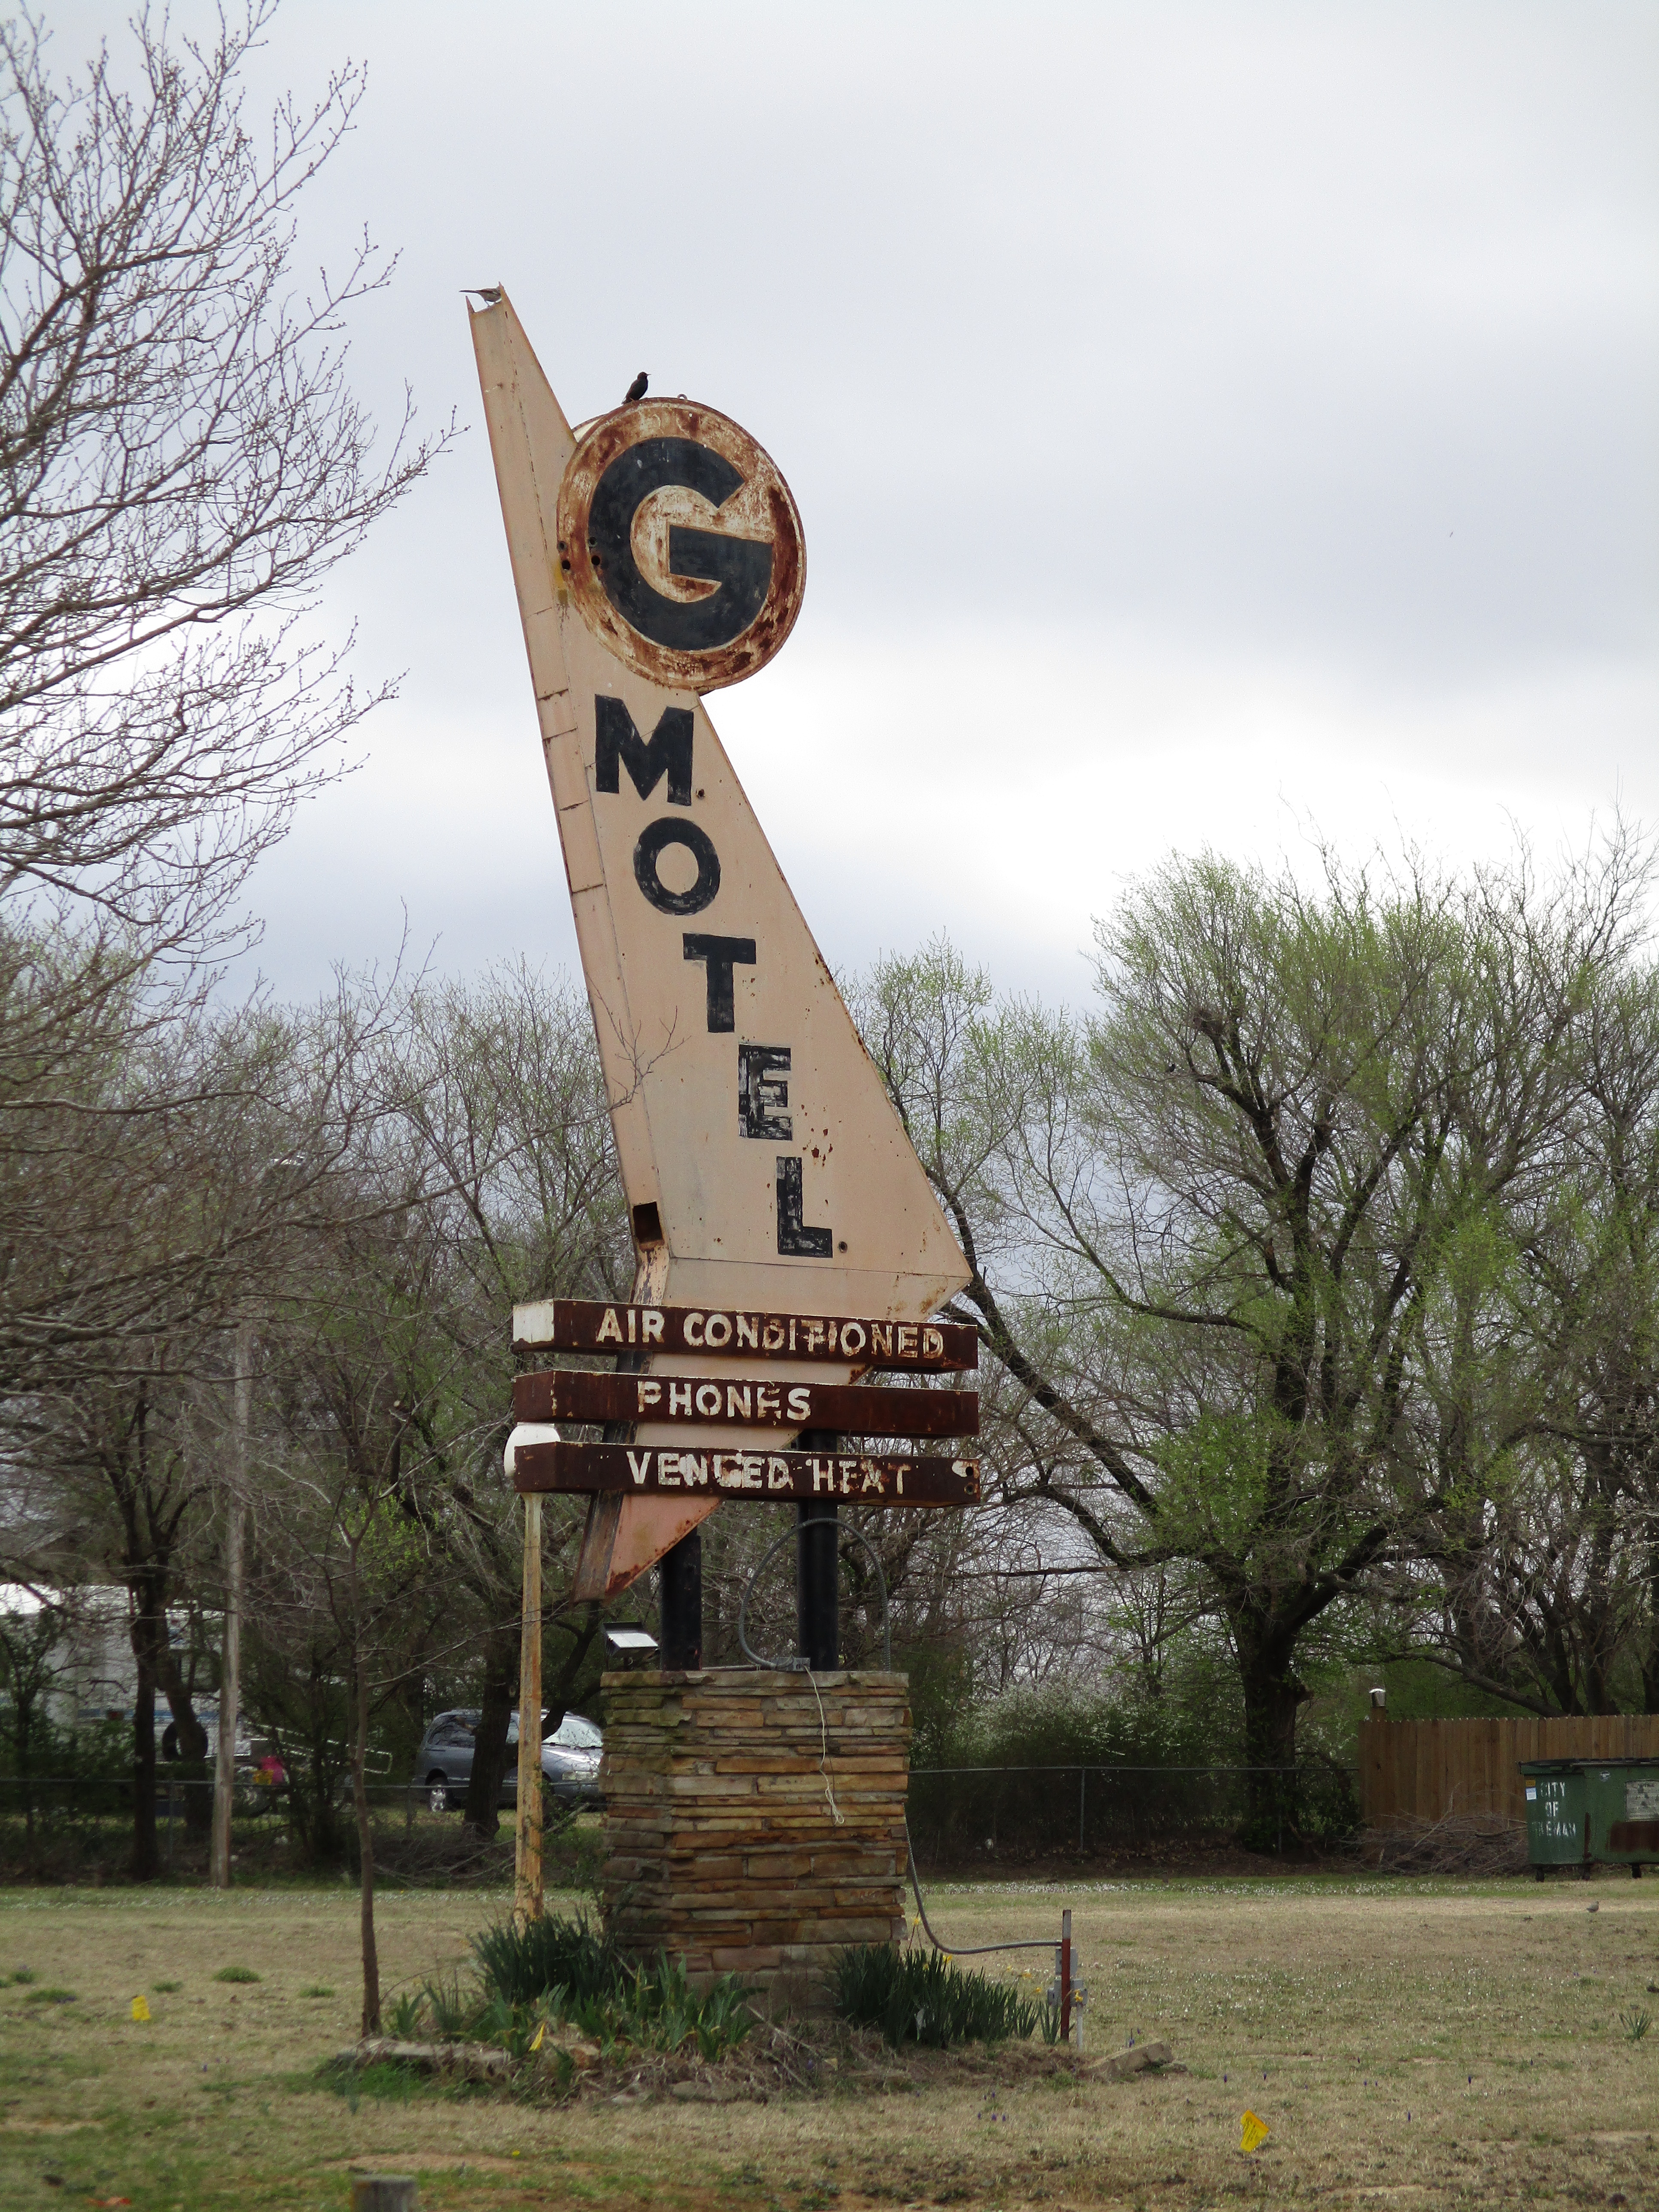 Circle G Motel - 1507 West Columbia Street, Okemah, Oklahoma U.S.A. - March 22, 2018